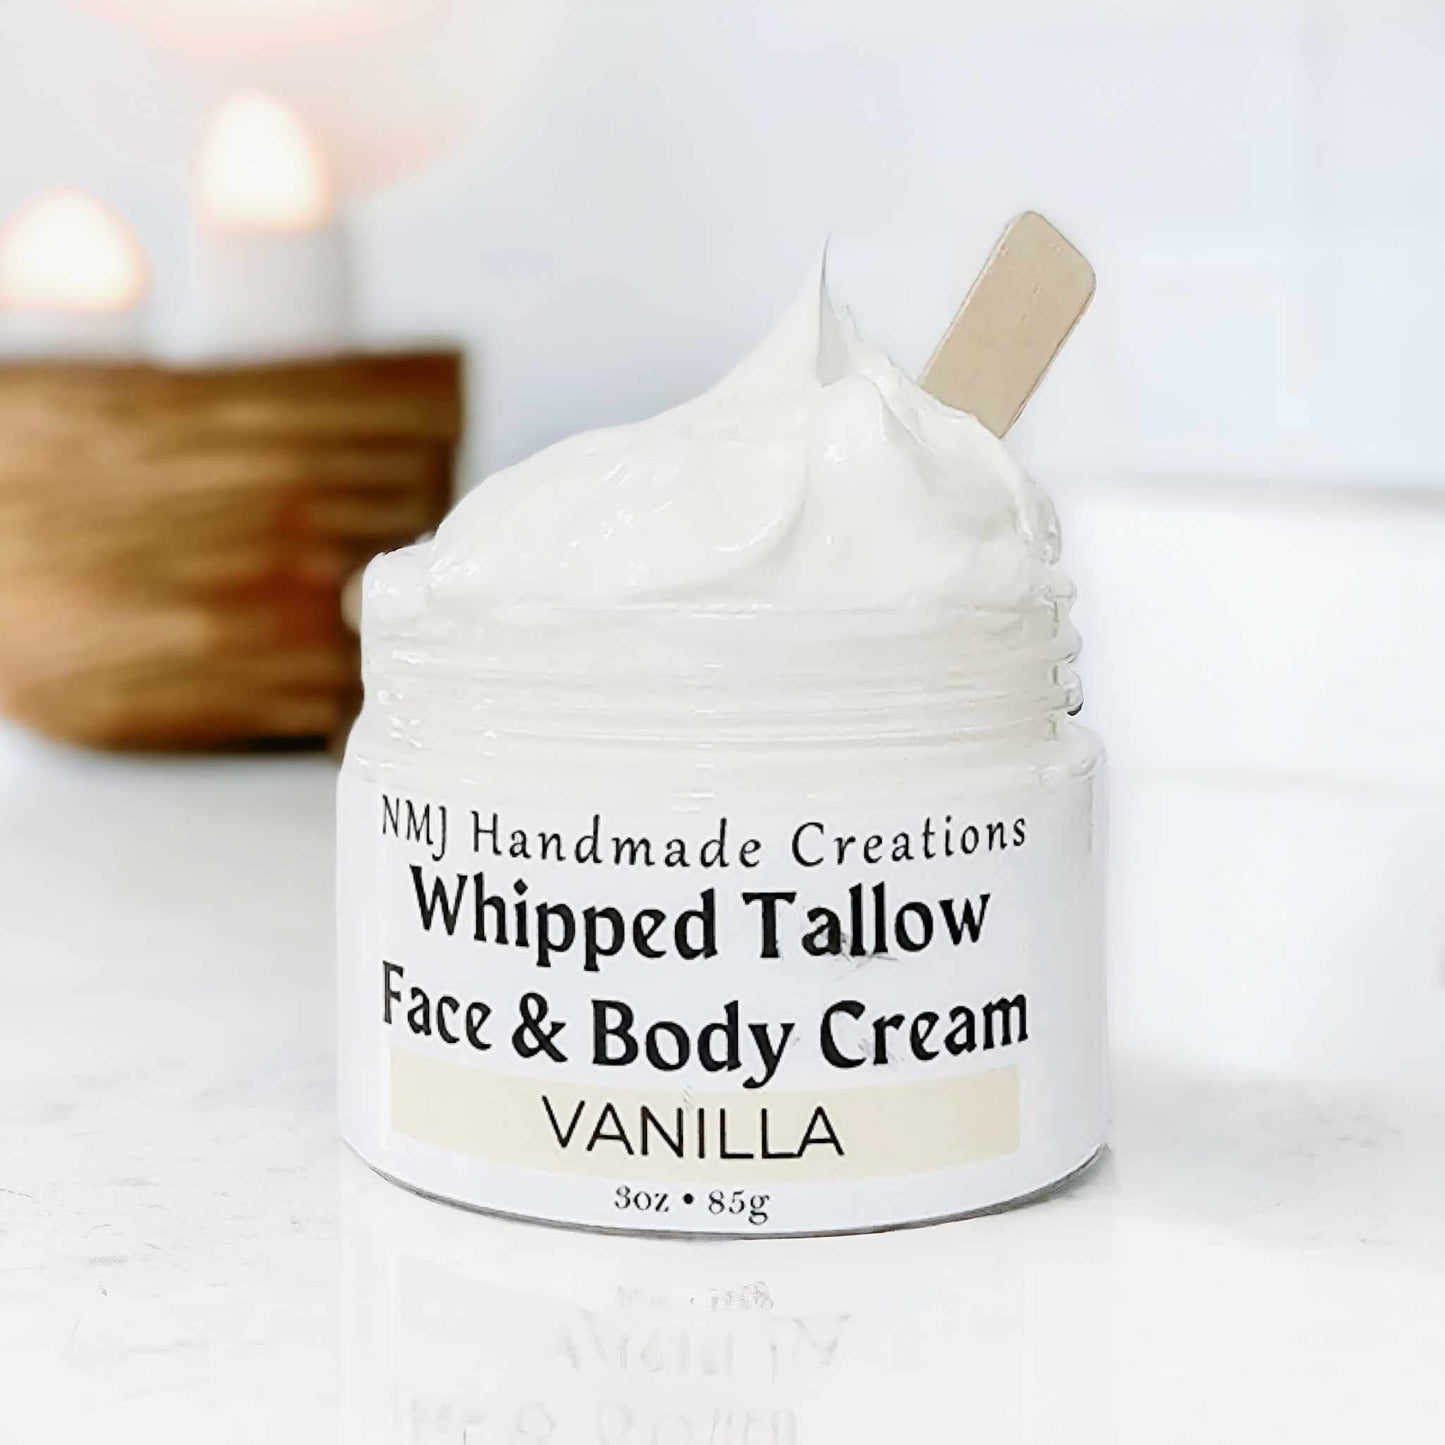 Vanilla, Whipped Tallow Face and Body Cream -  3 oz & 6 oz sizes